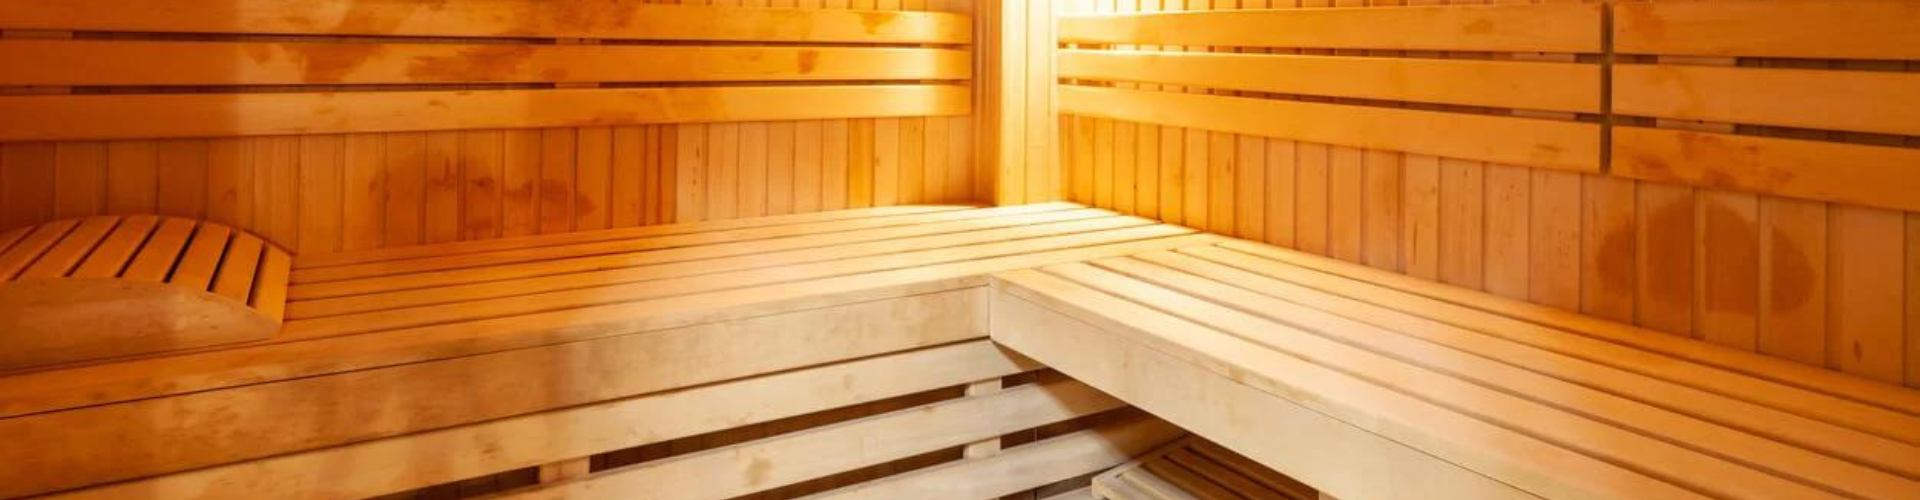 wooden interior of a sauna